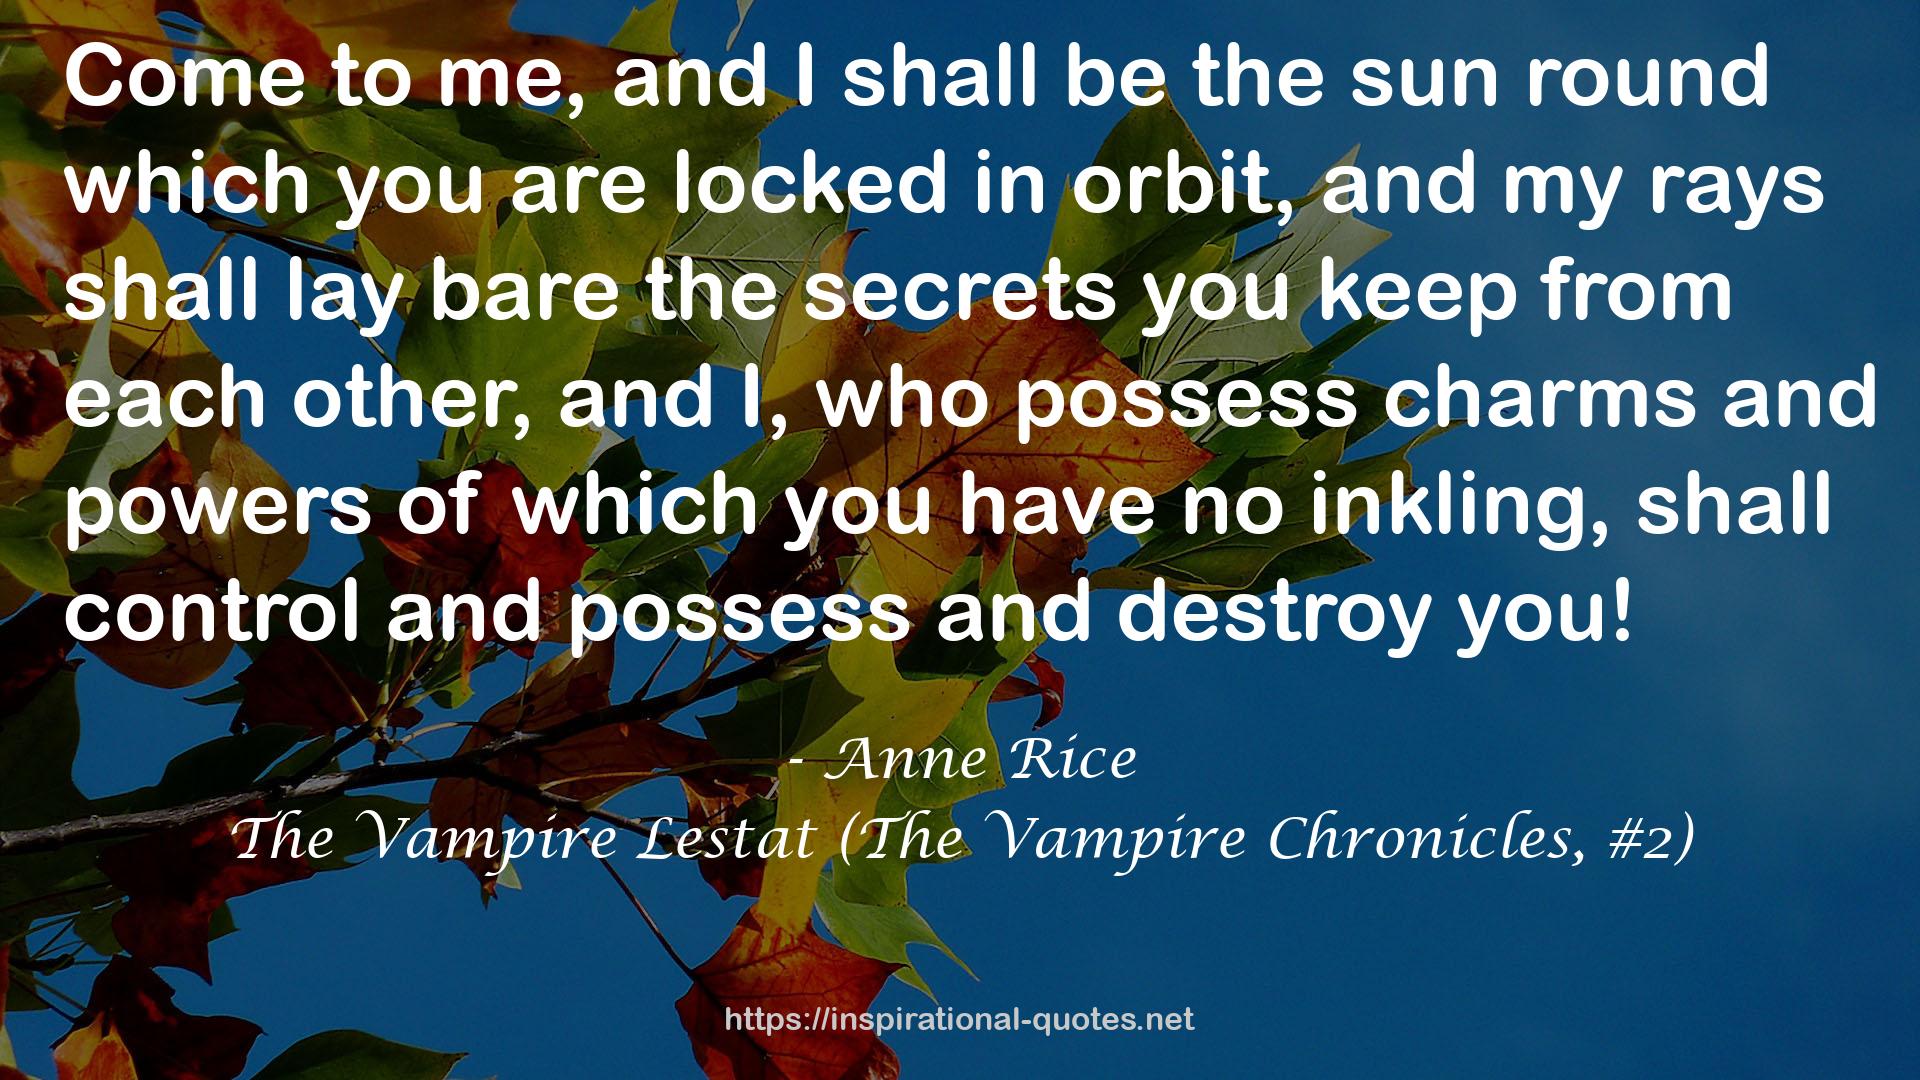 The Vampire Lestat (The Vampire Chronicles, #2) QUOTES